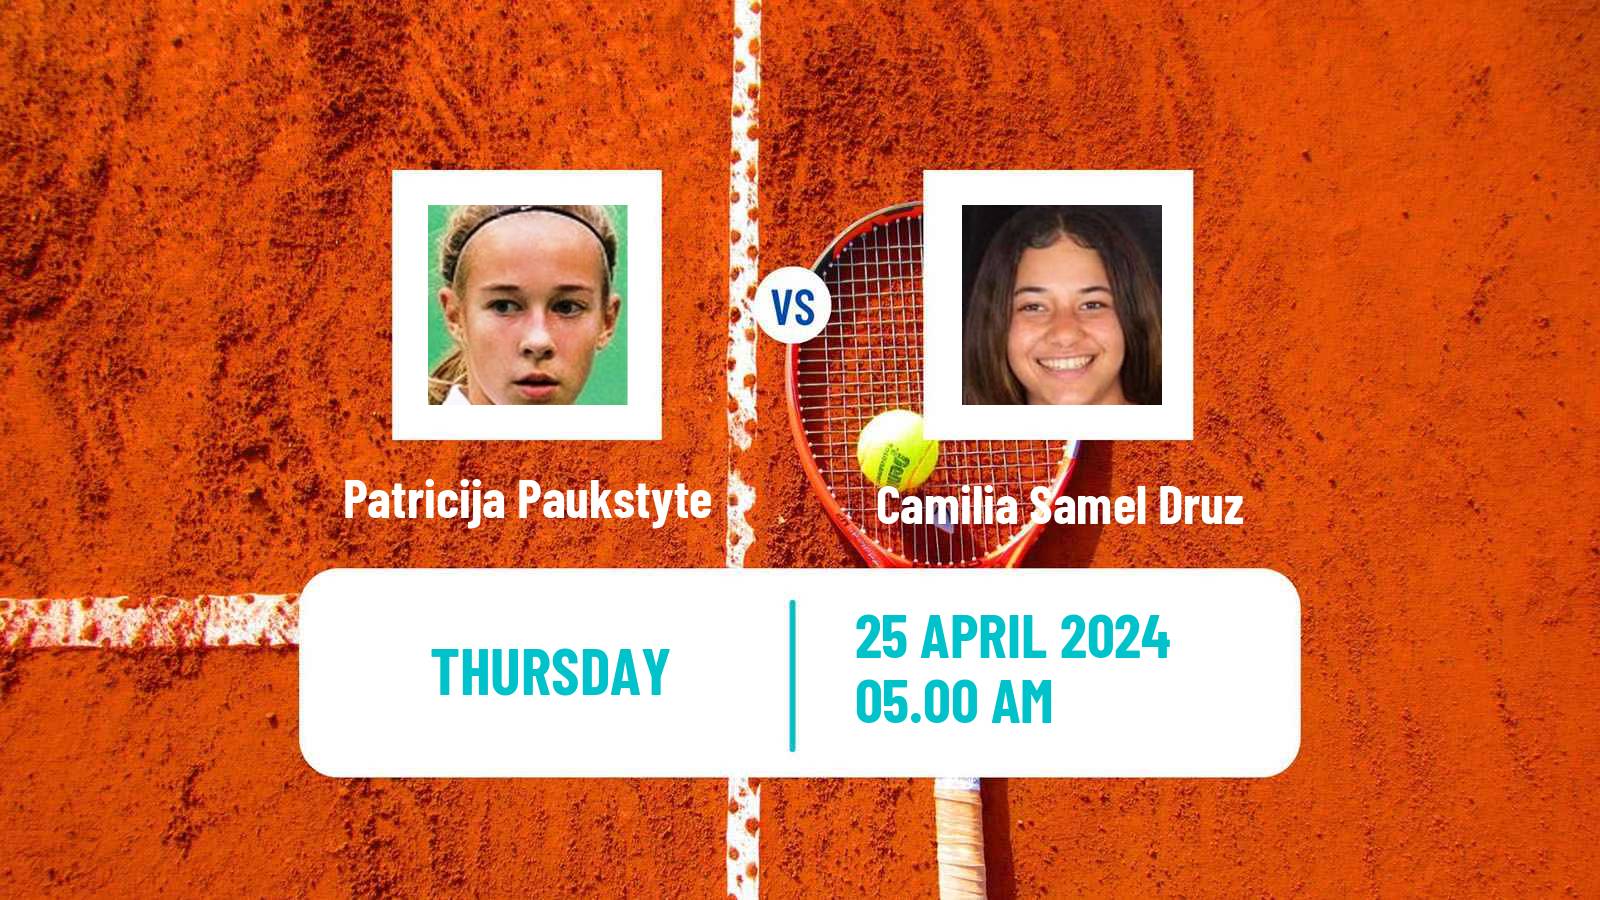 Tennis ITF W15 Monastir 15 Women Patricija Paukstyte - Camilia Samel Druz